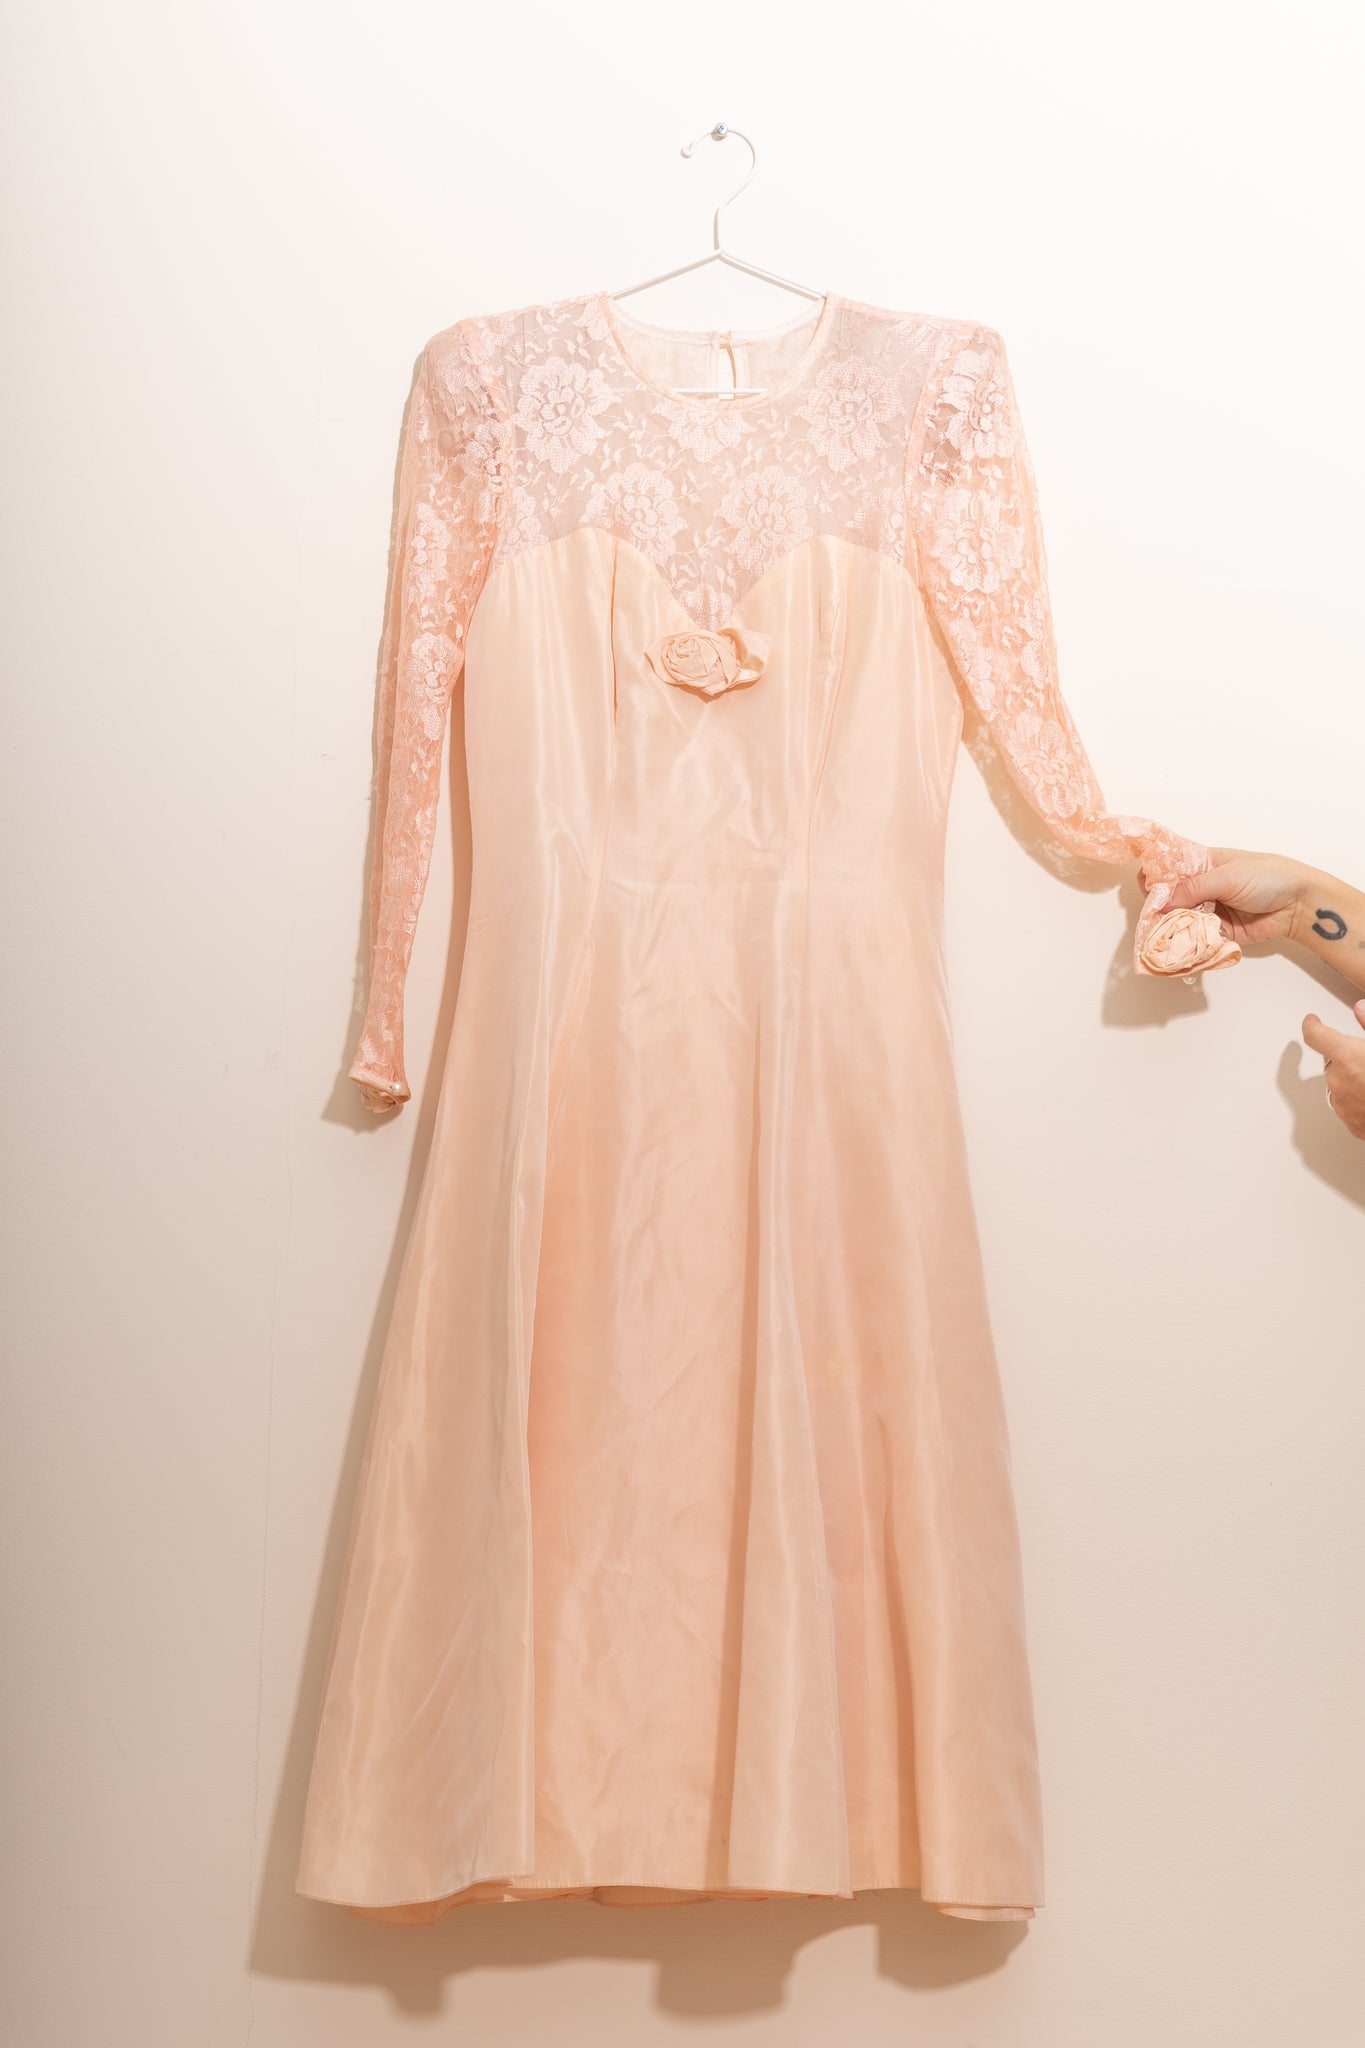 Peach Lace & Rosette Sweetheart Dress (M)